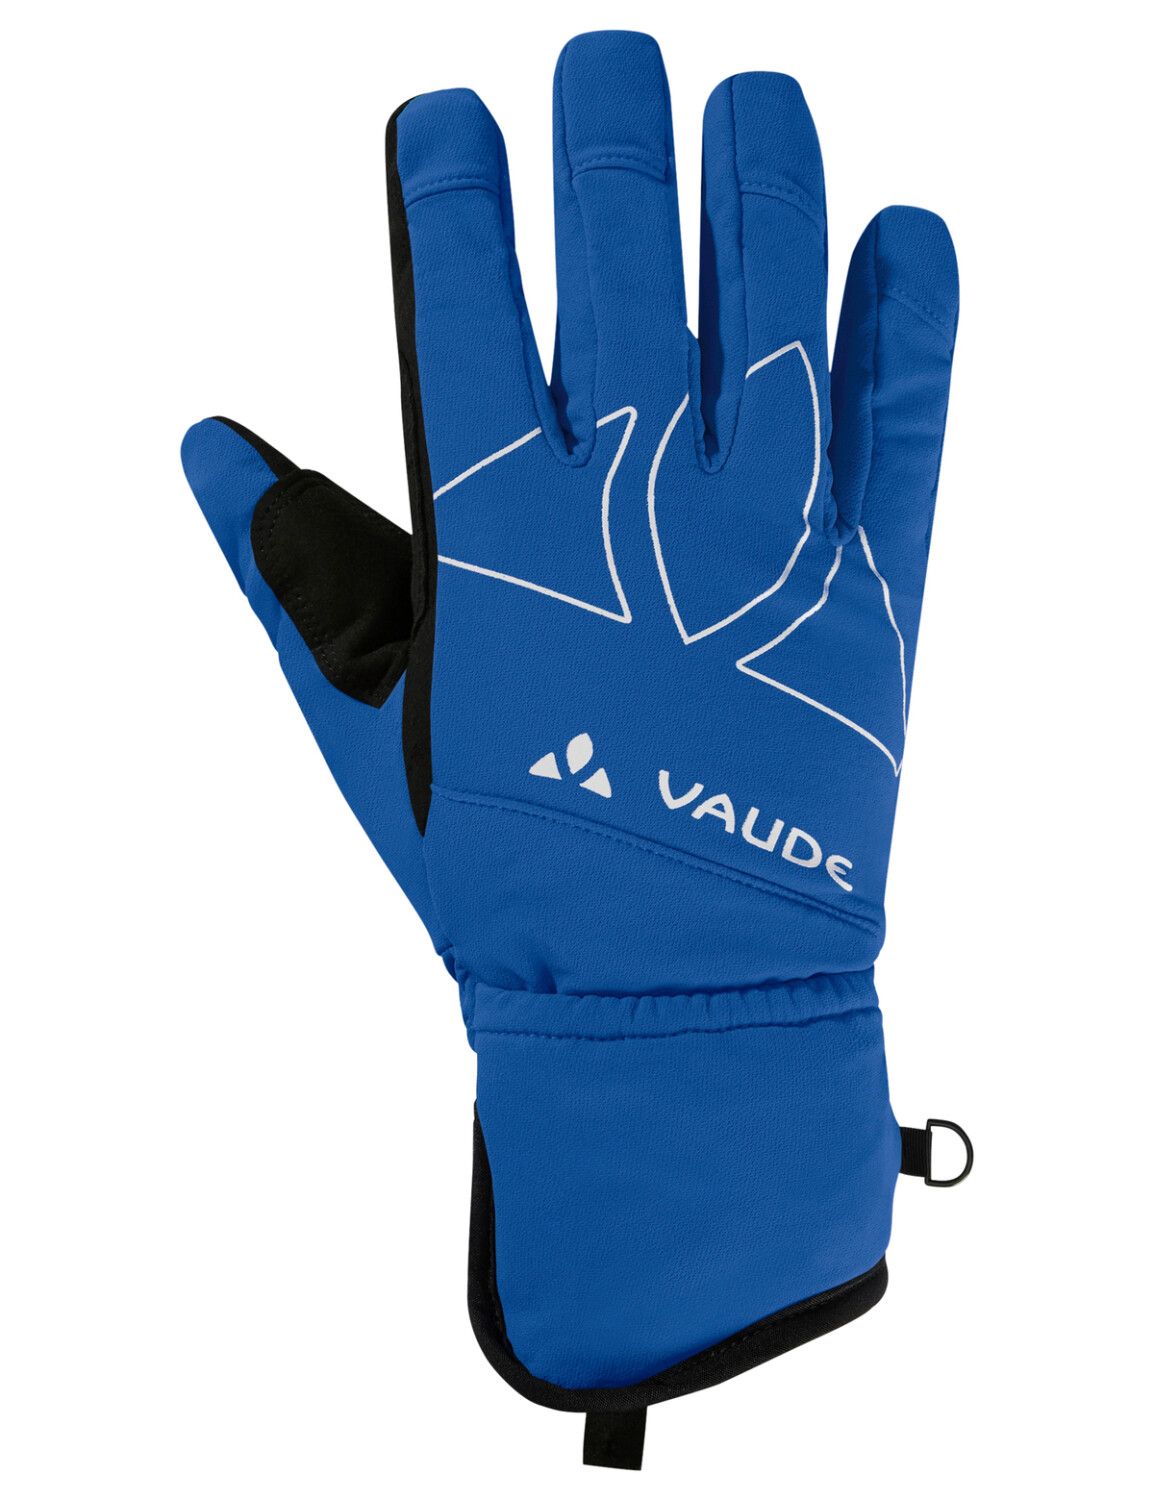 VAUDE La Varella Gloves (Bild 13)